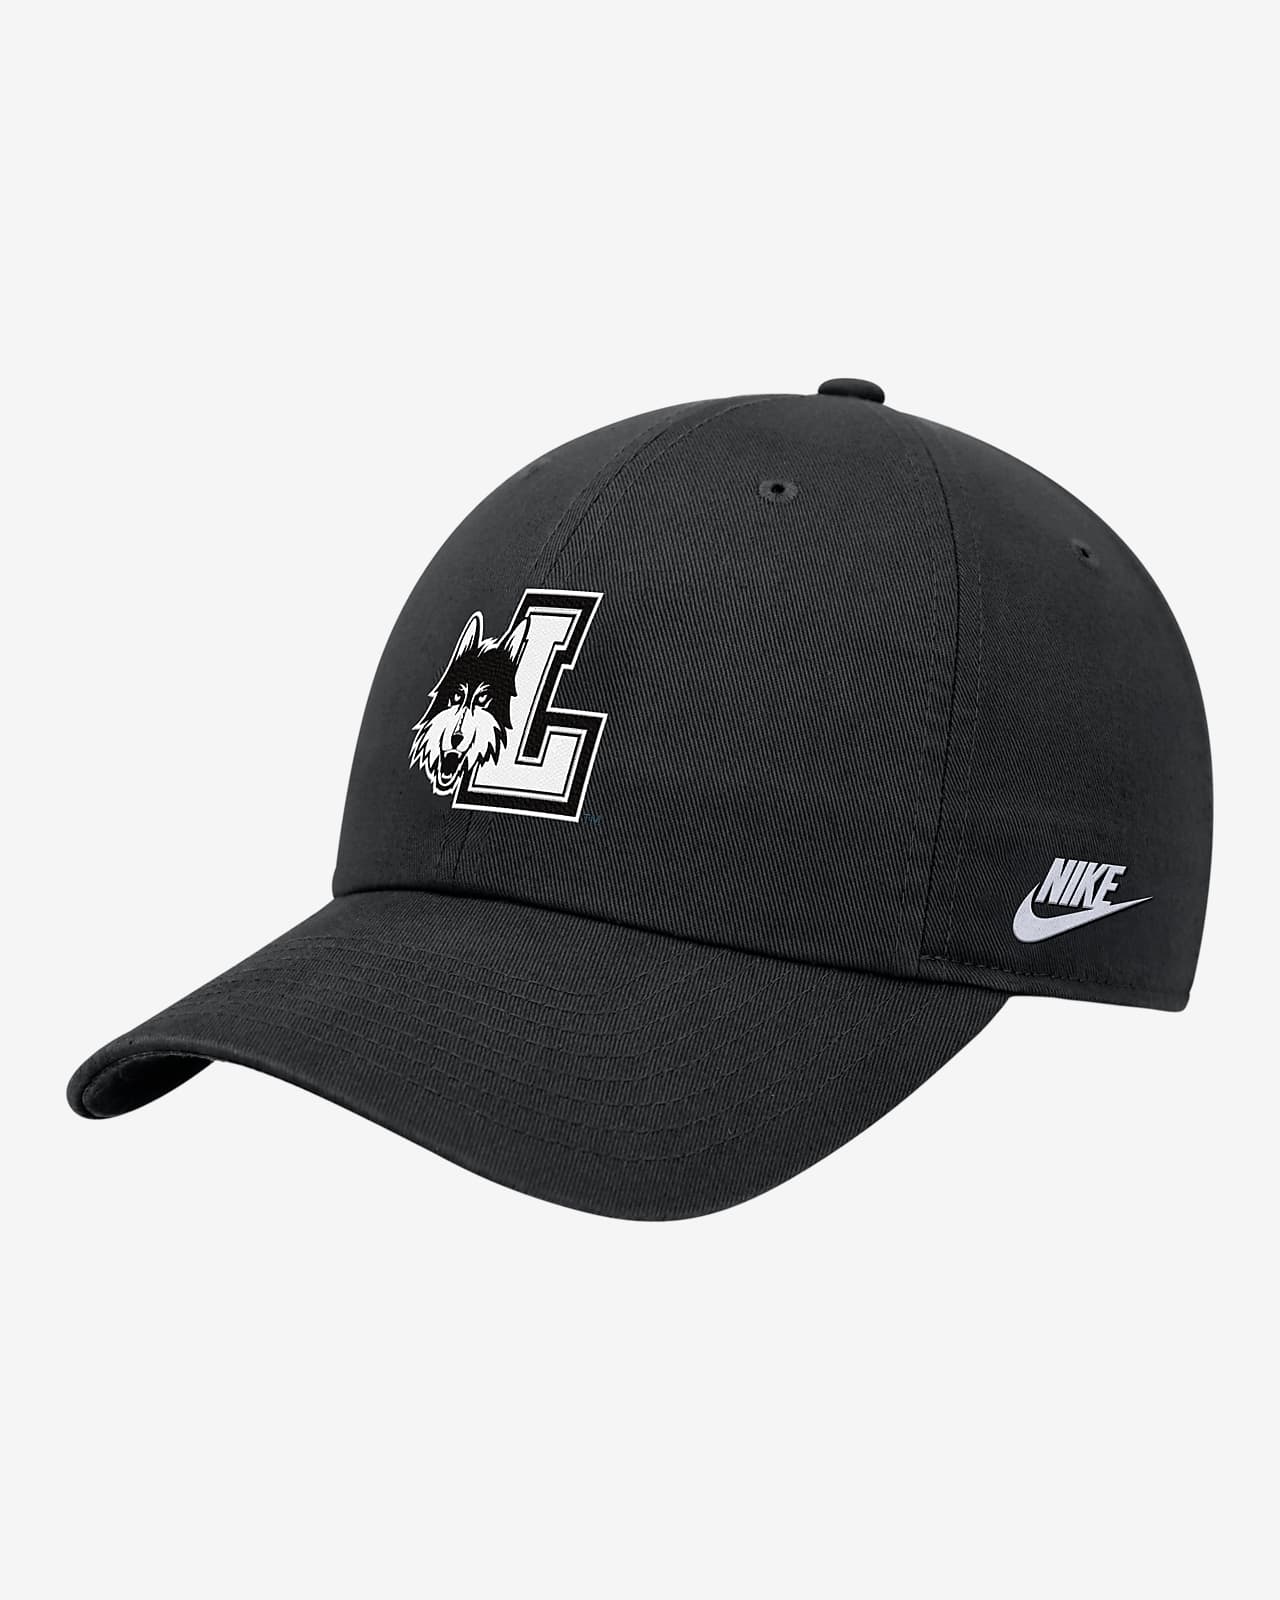 Loyola Chicago Nike College Cap